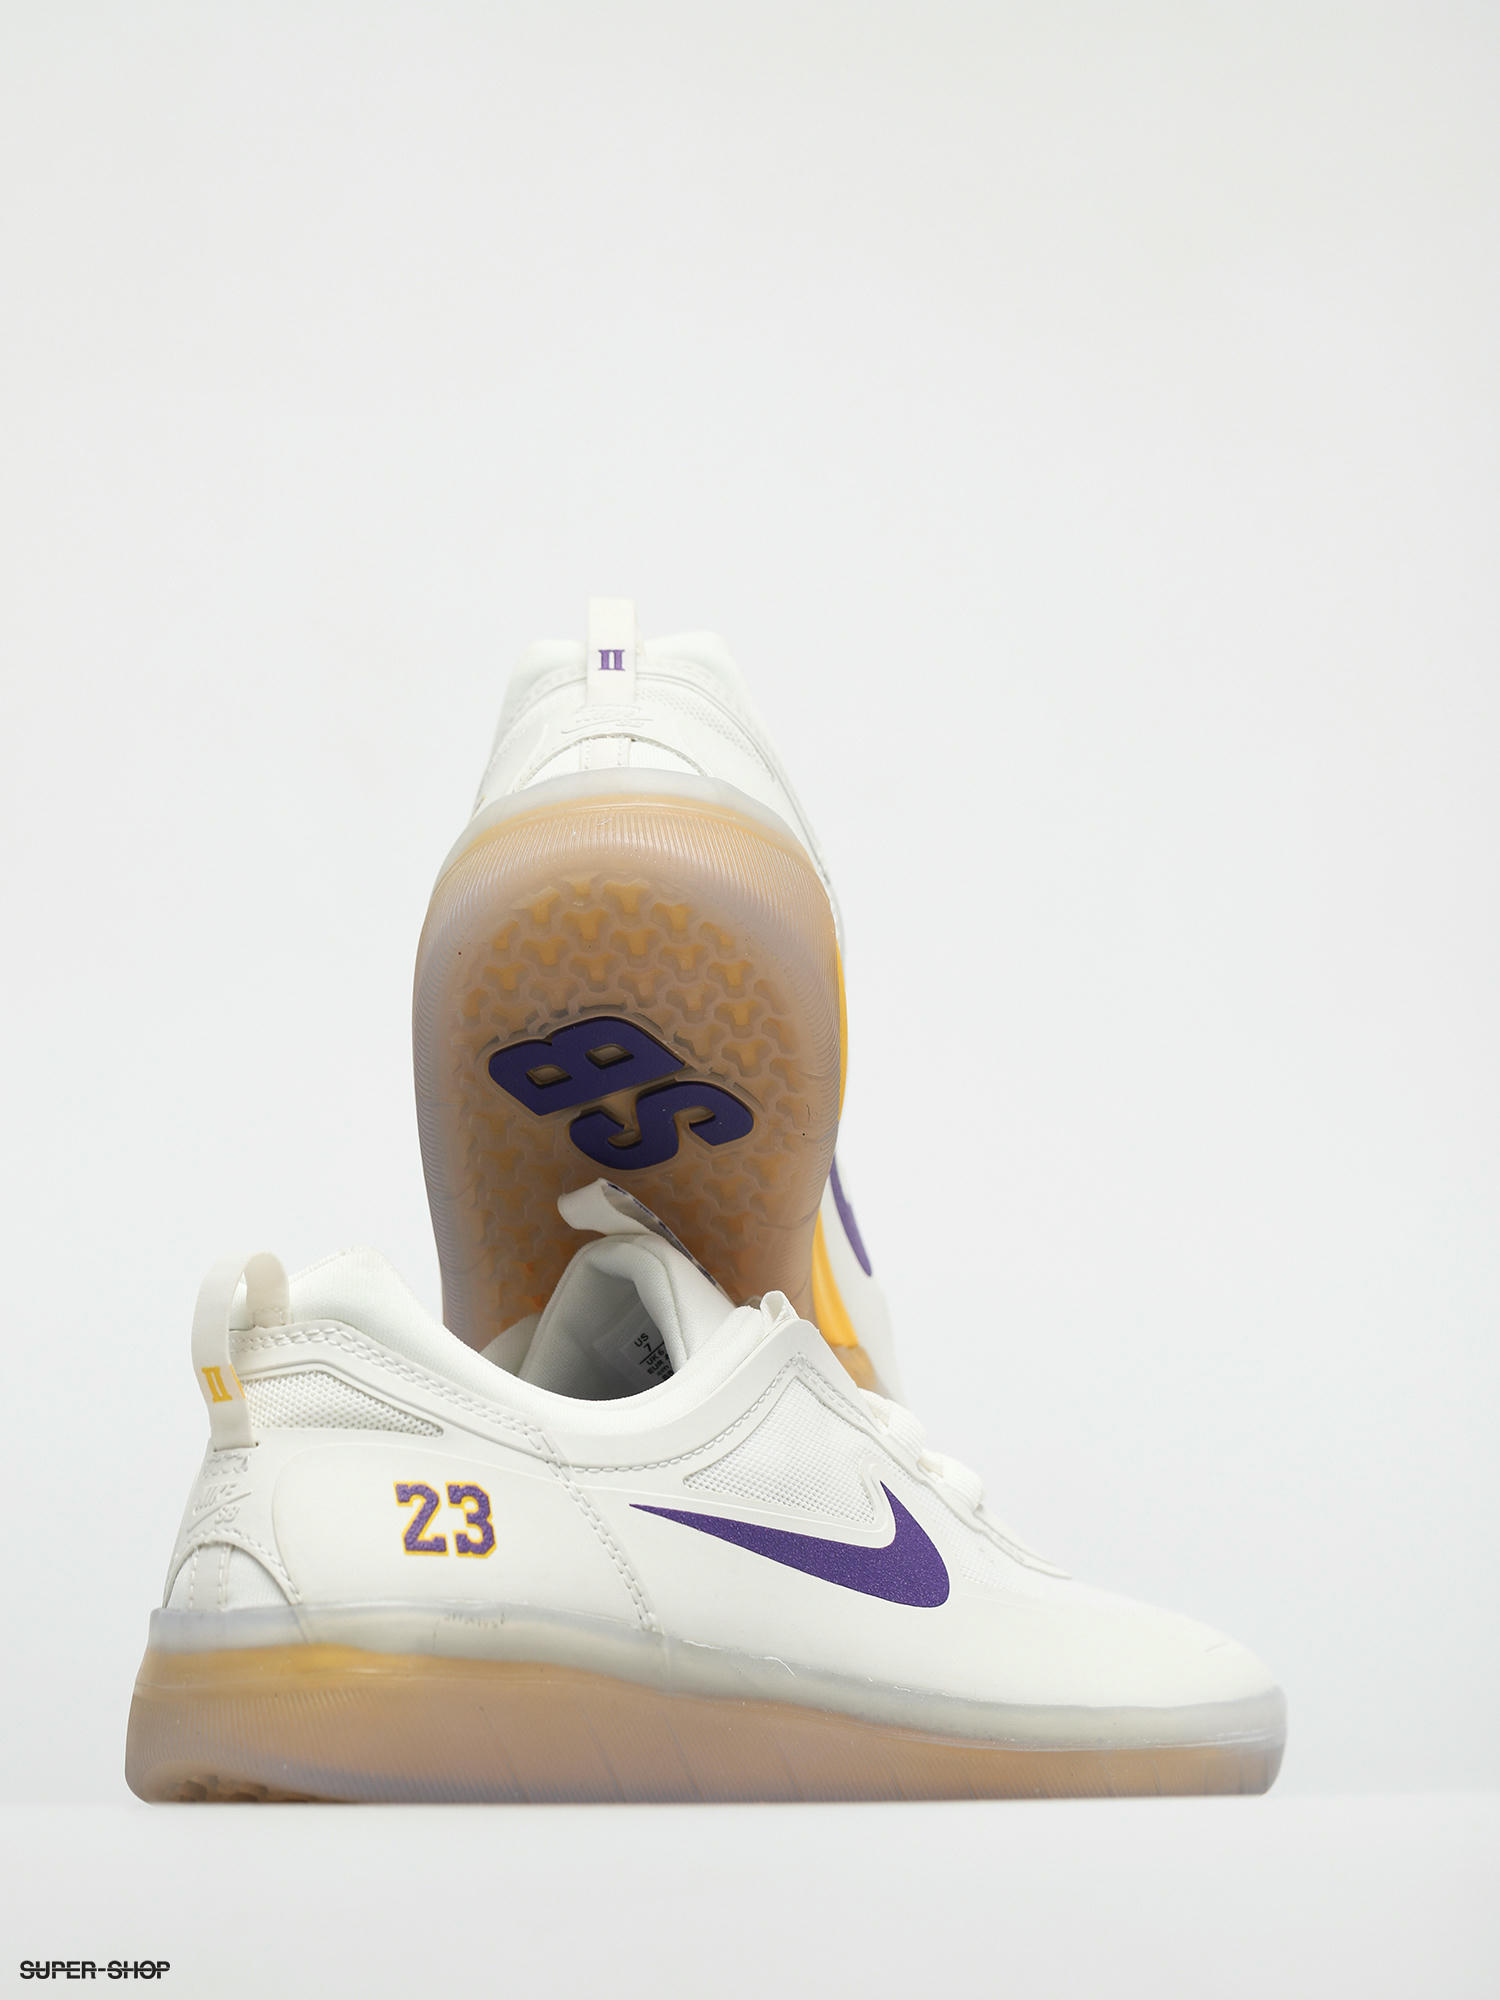 Nike SB Nyjah Free 2 NBA Shoes (summit white/court purple amarillo)